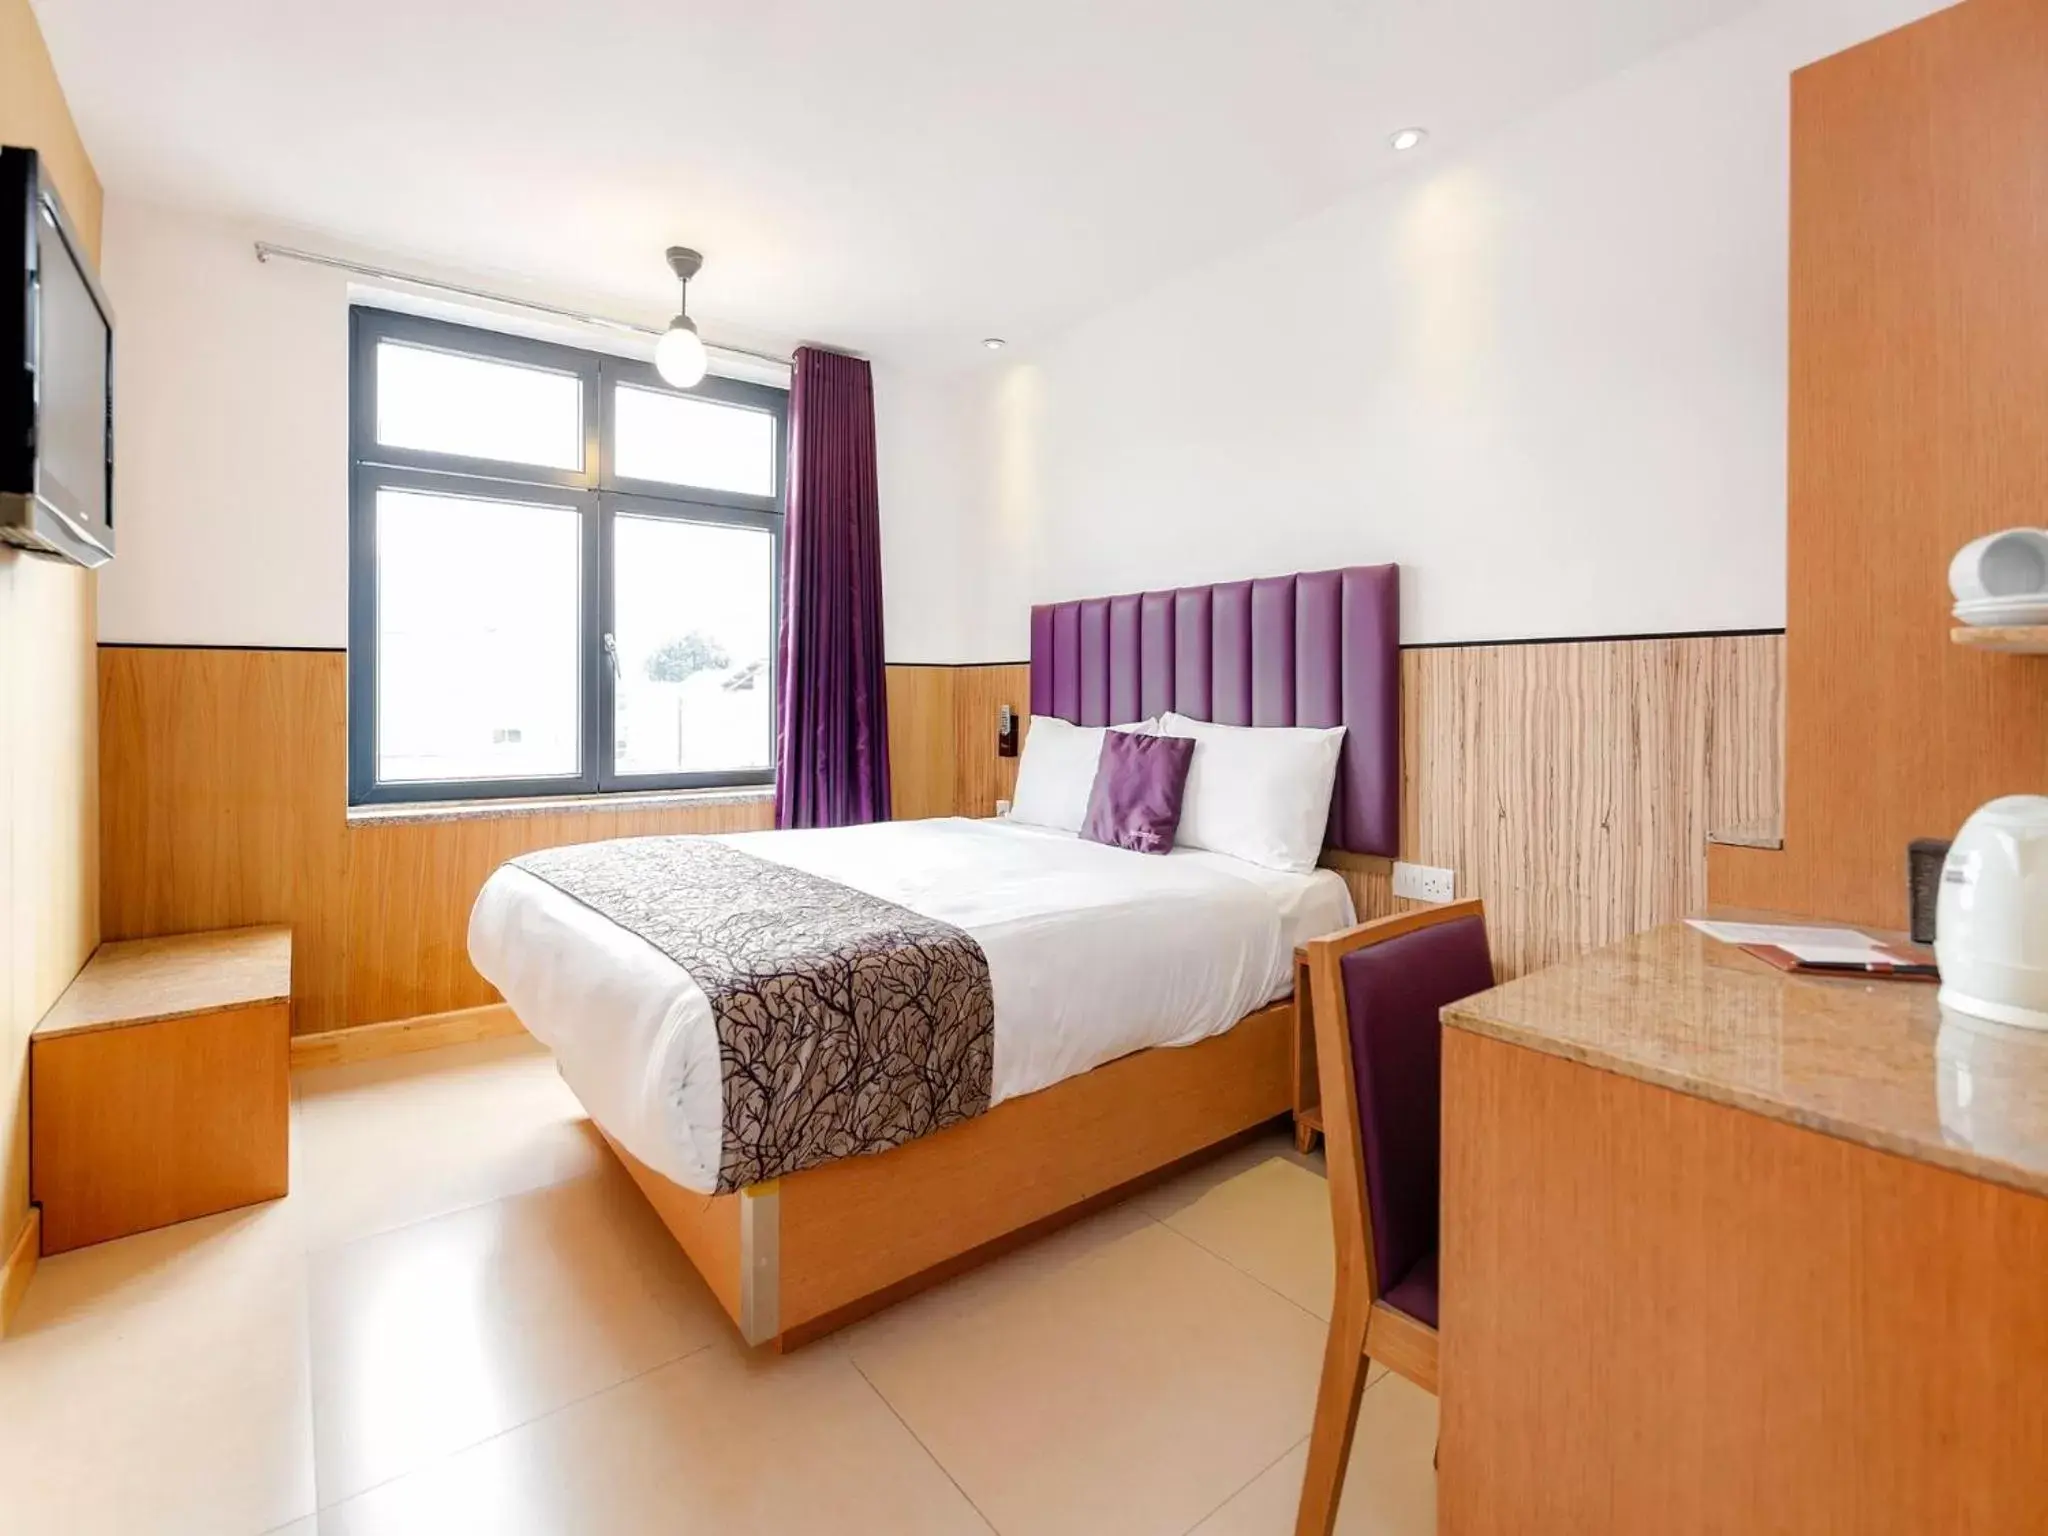 Bed, Room Photo in Eurotraveller Hotel - Premier - Tower Bridge